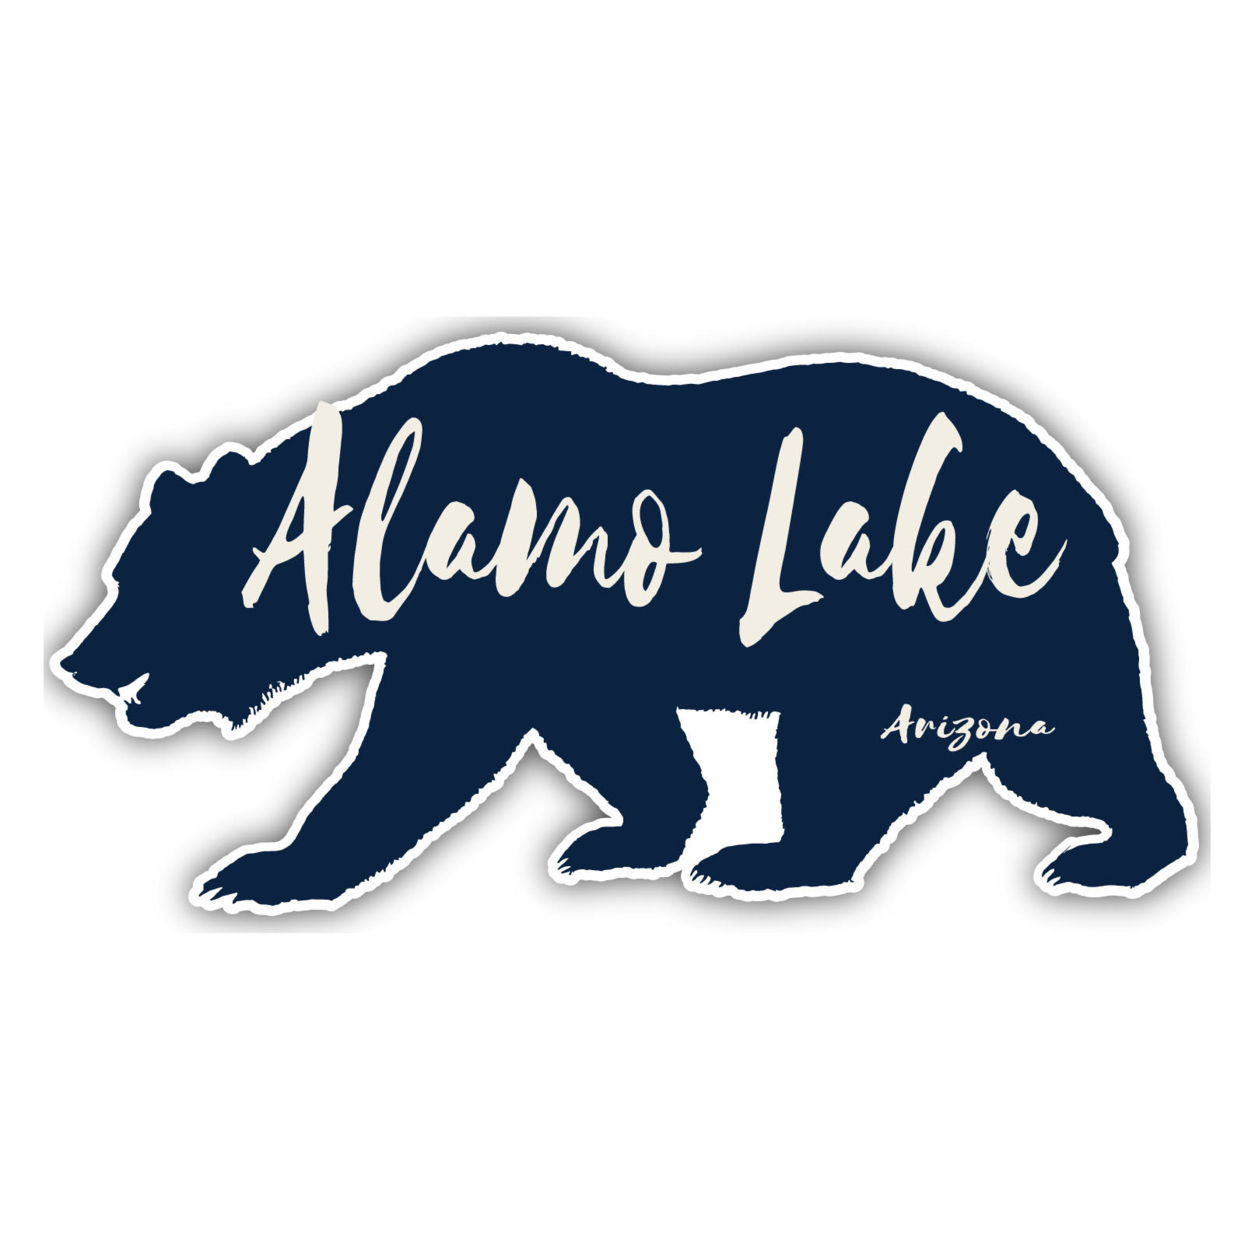 Alamo Lake Arizona Souvenir Decorative Stickers (Choose Theme And Size) - 4-Pack, 2-Inch, Tent